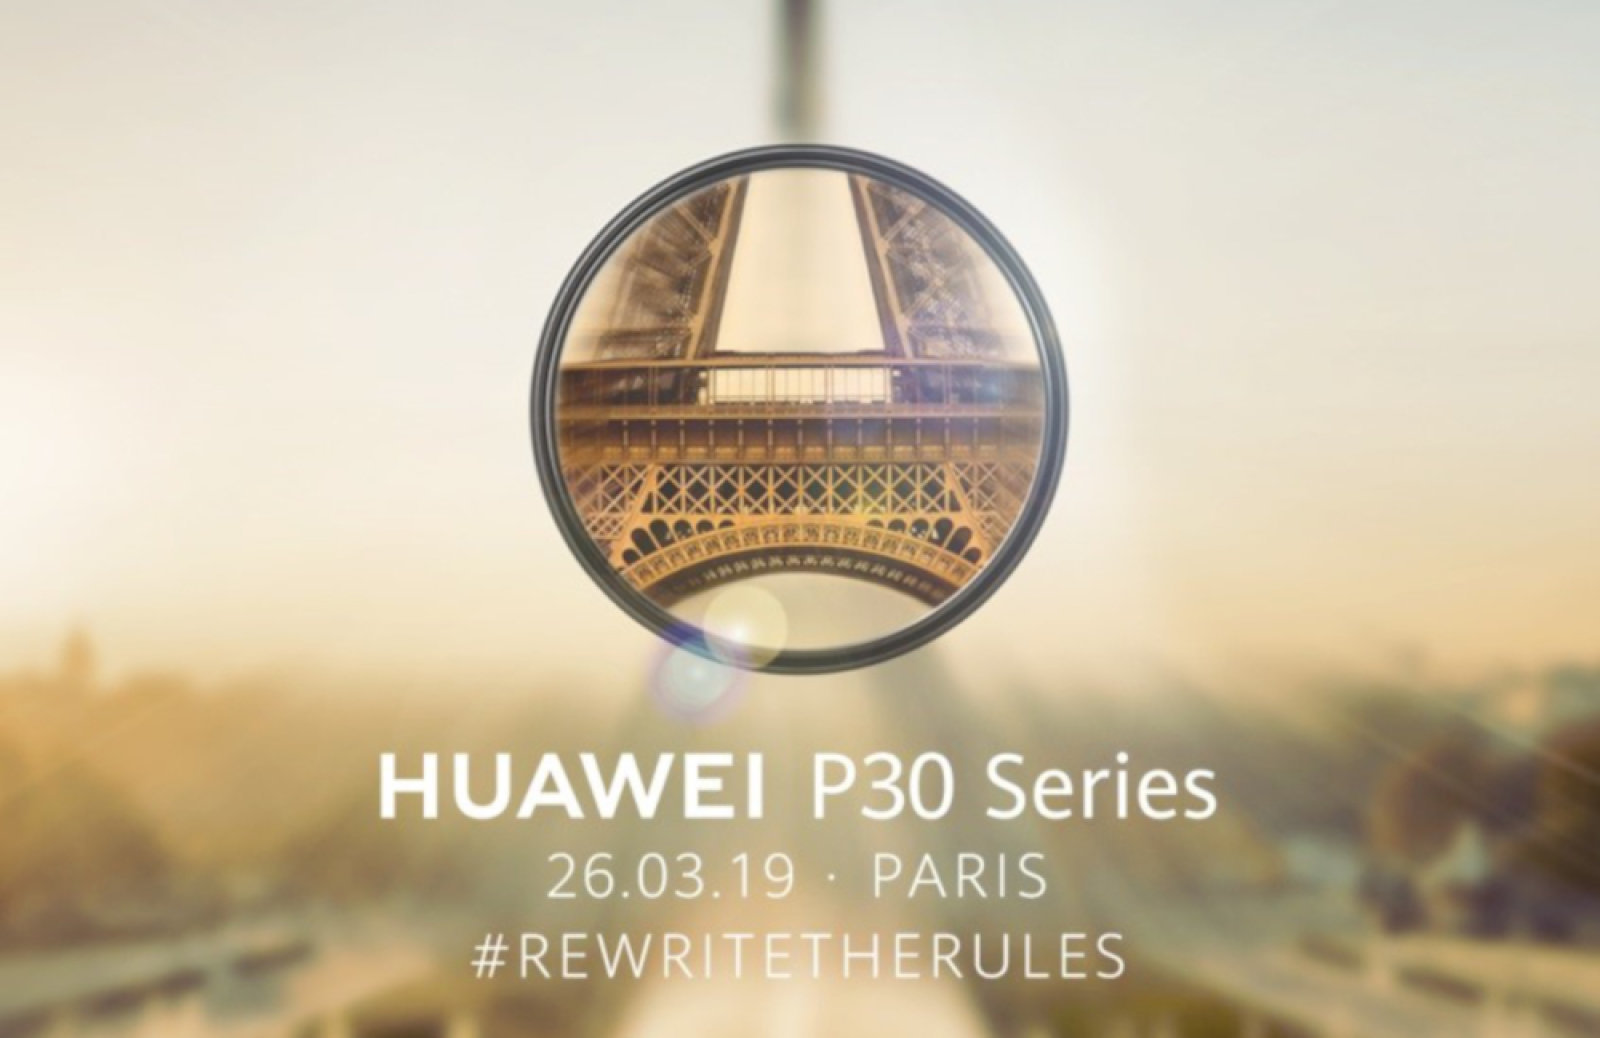 Huawei P30 launch event